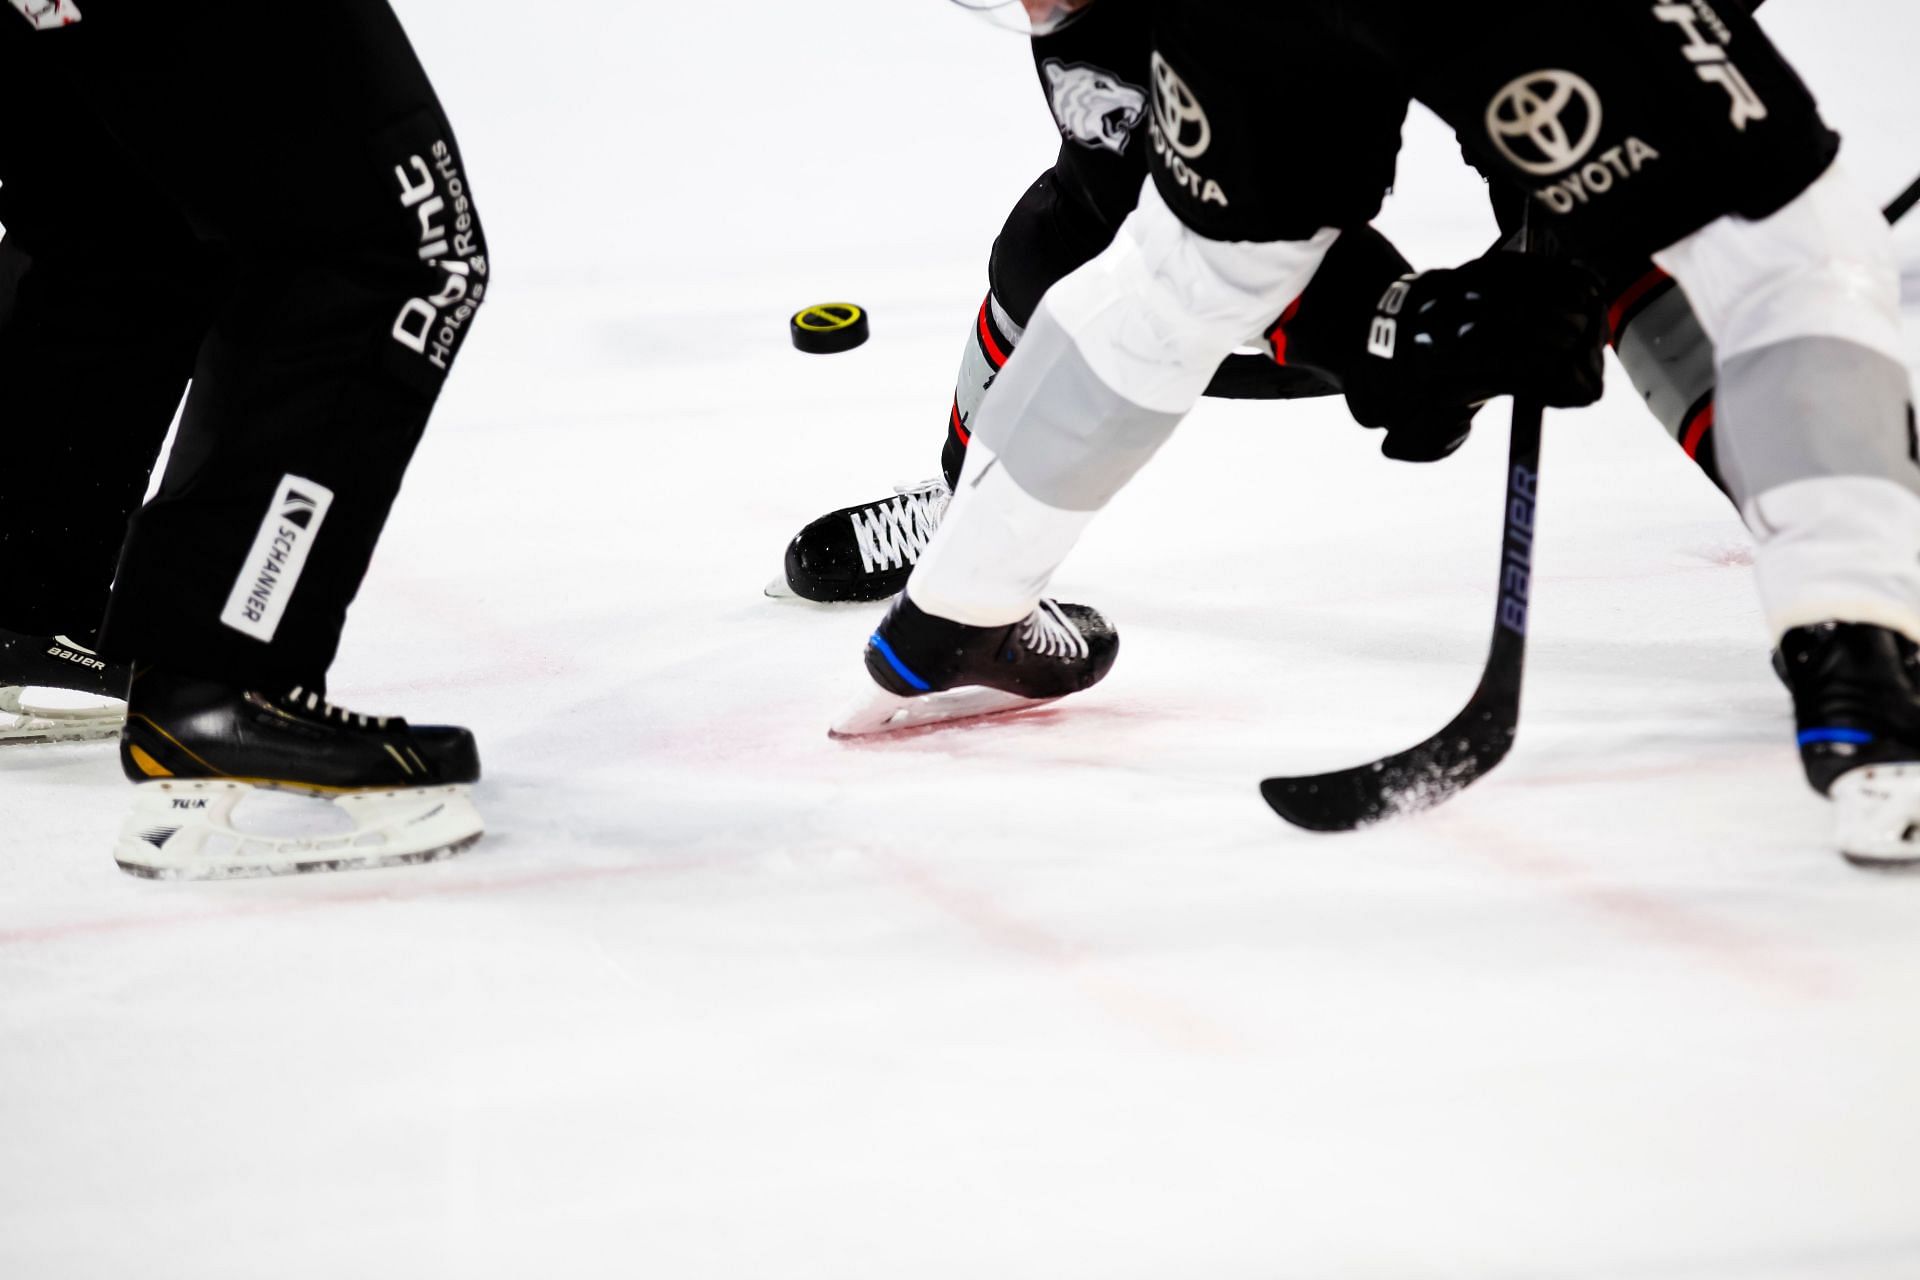 Hockey player dies after accident during cup match (Image via Unsplash/Markus Spiske)